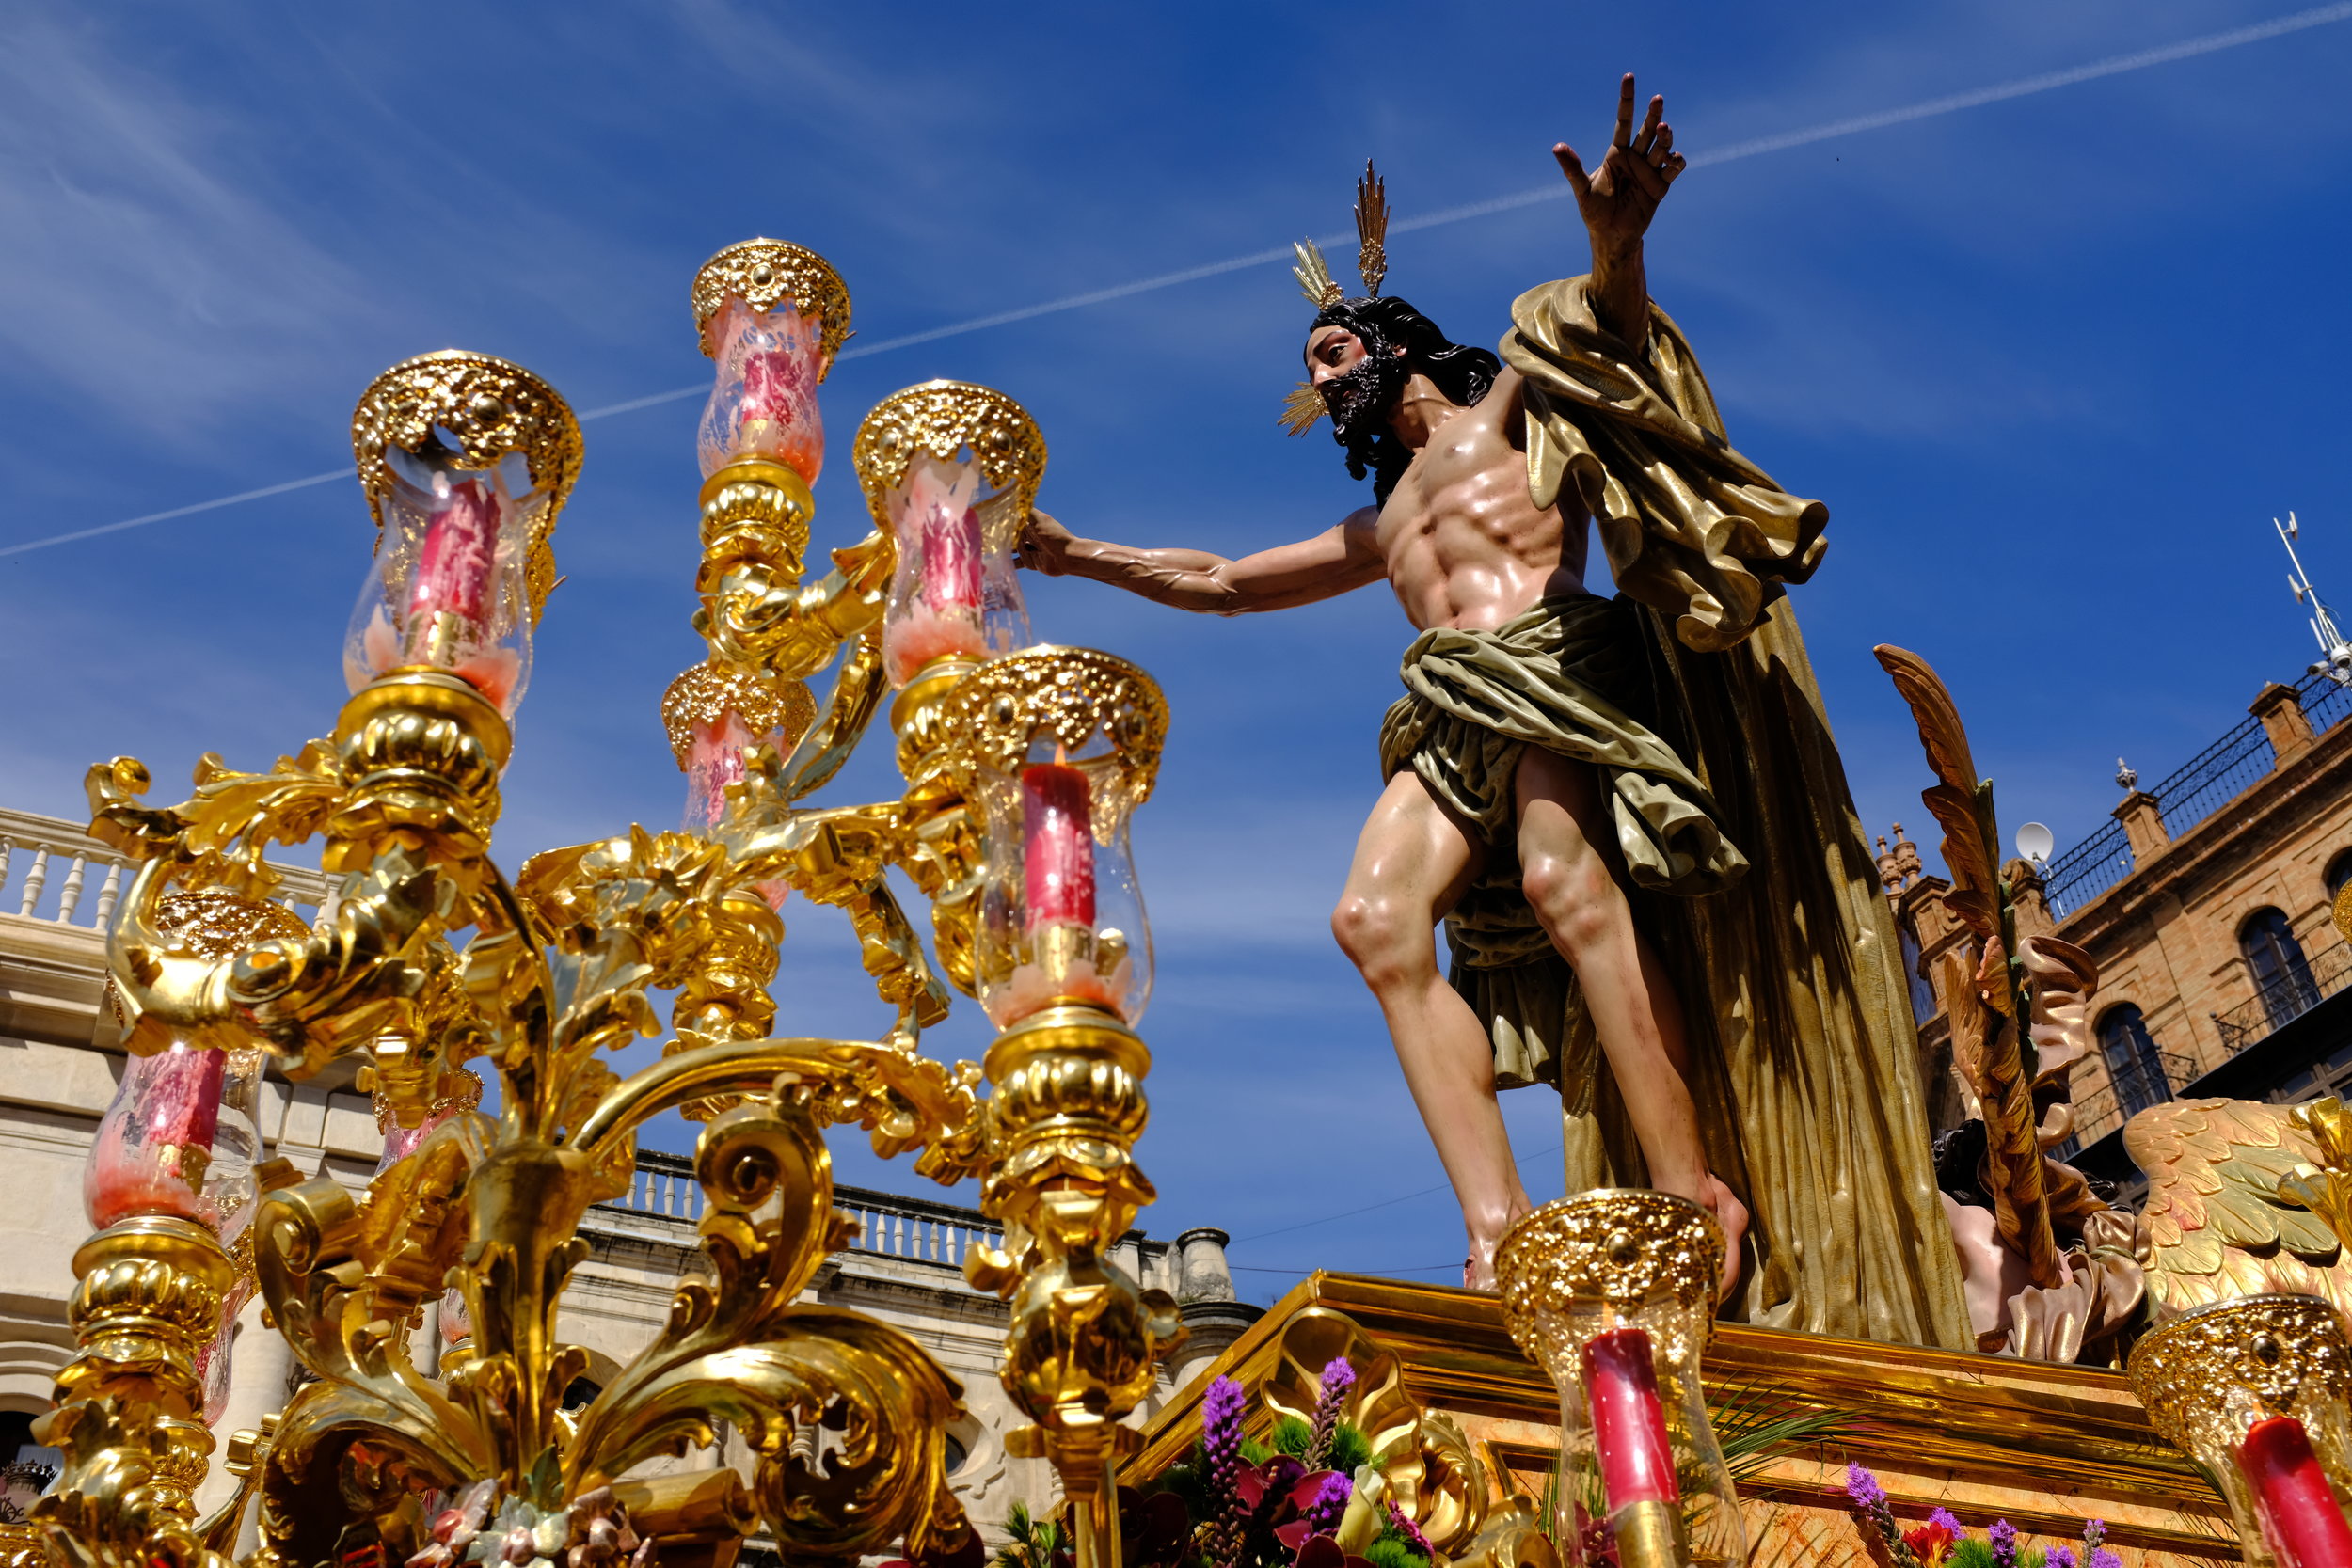 Semana Santa in Seville, Spain – My First Spanish Holy Week — City Nibbler